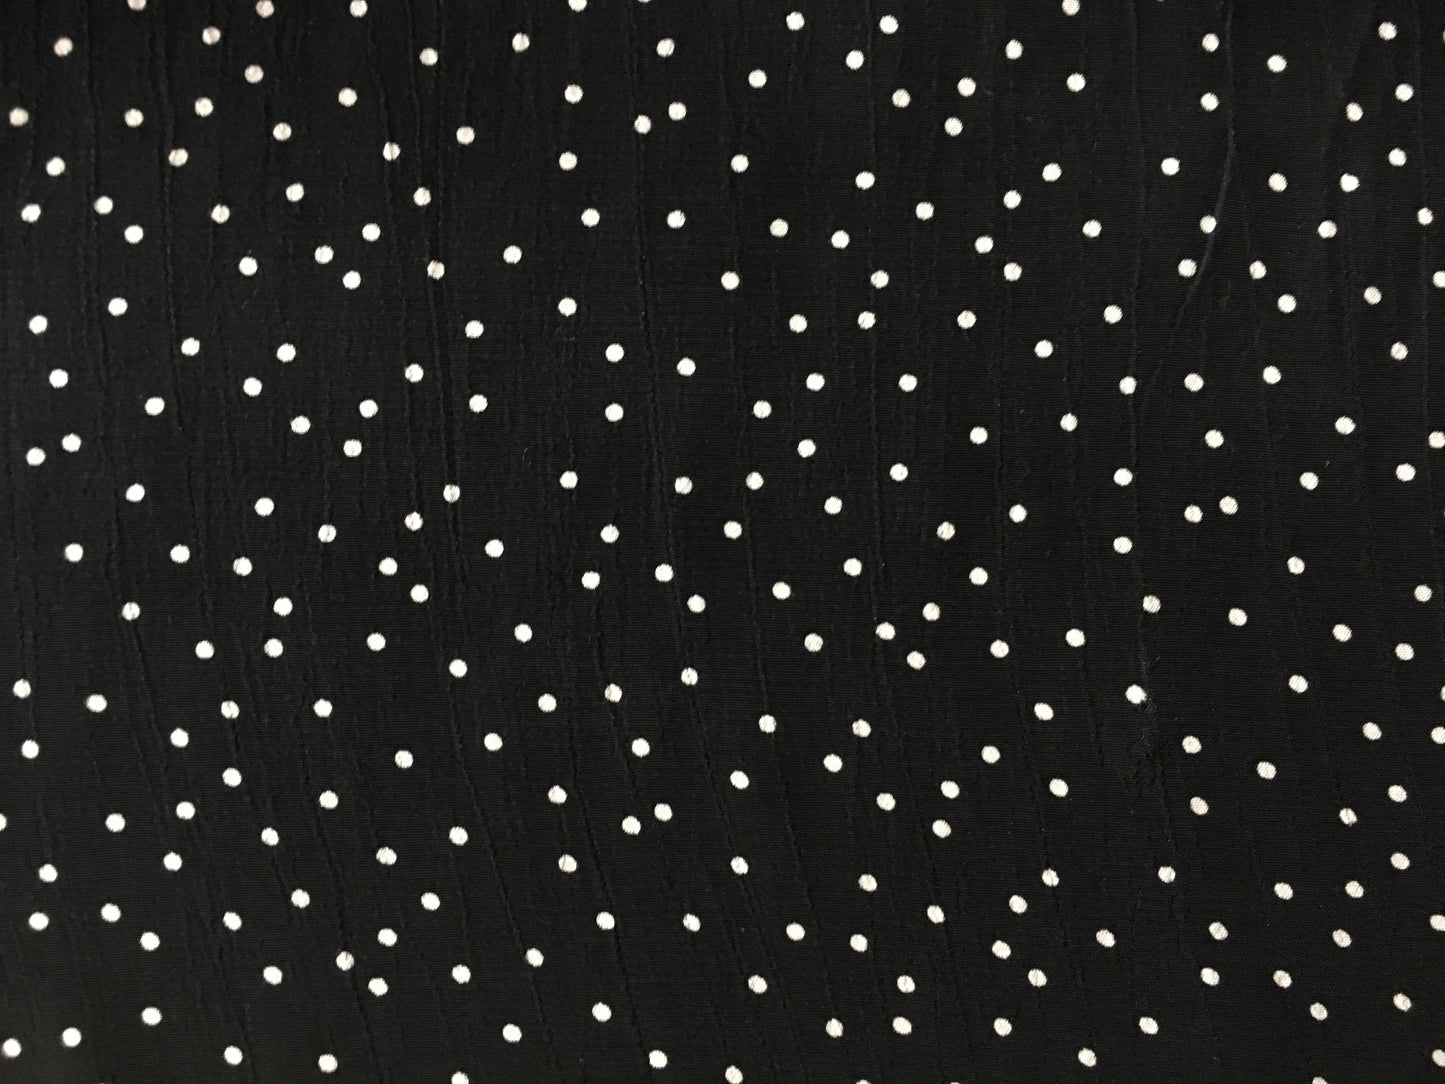 Viscose Marocaine Crepe Dressmaking Fashion Fabric - Black/White Polka Dot